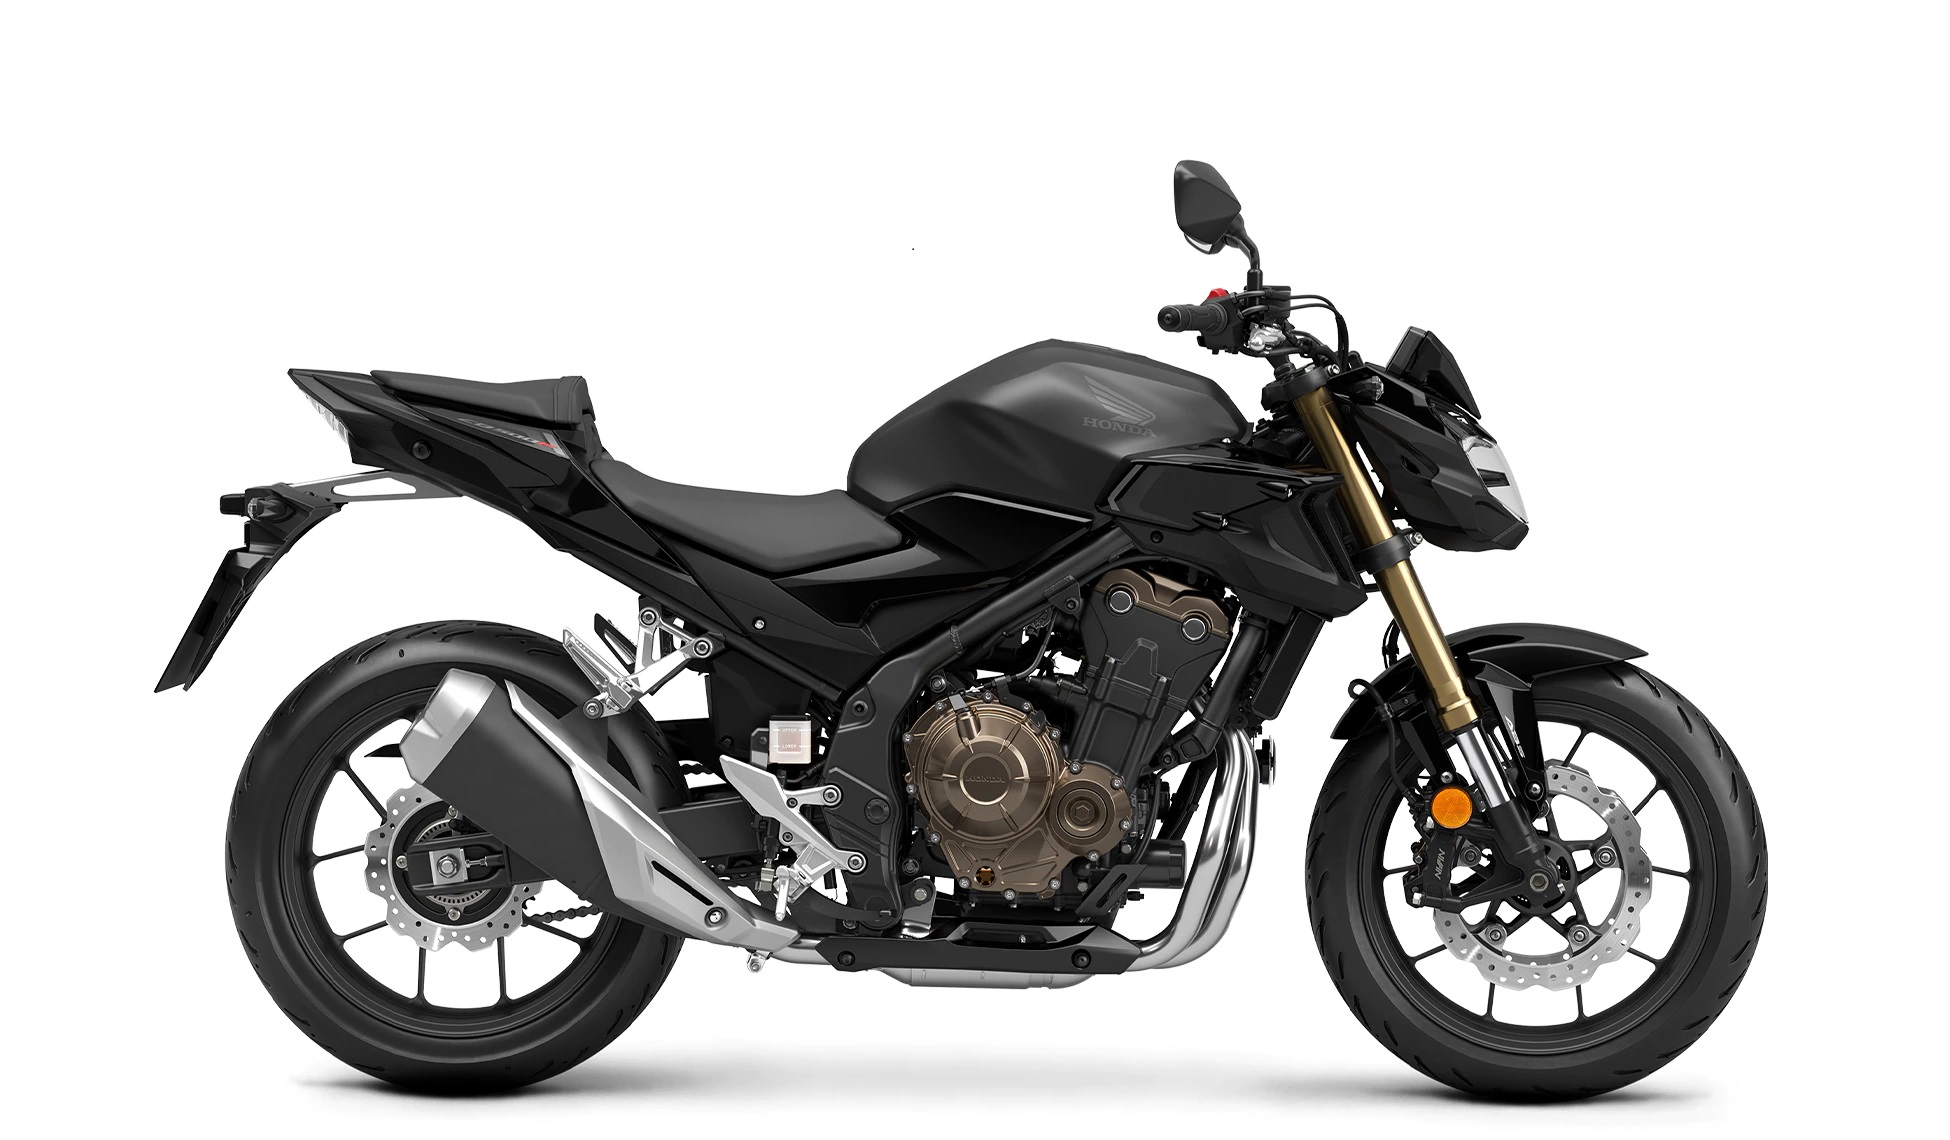 2022 Honda CB500F ABS in Matte Gray Metallic